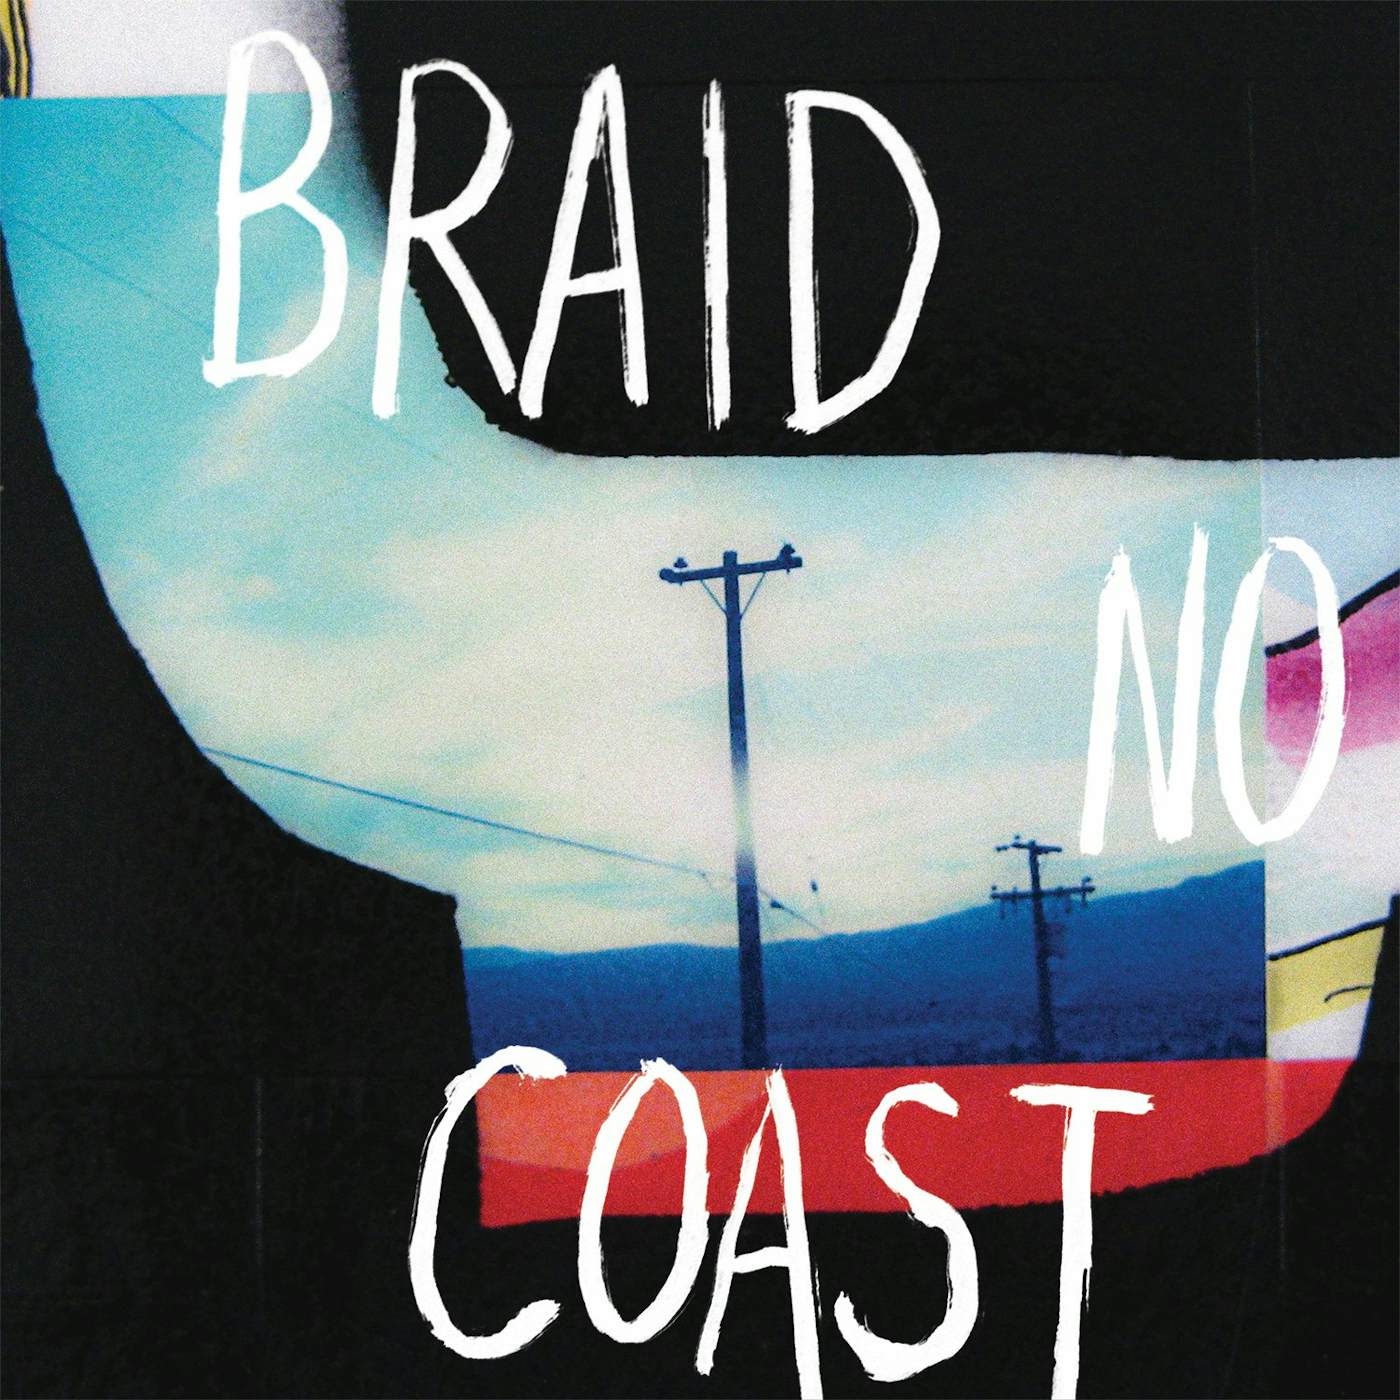 Braid NO COAST CD